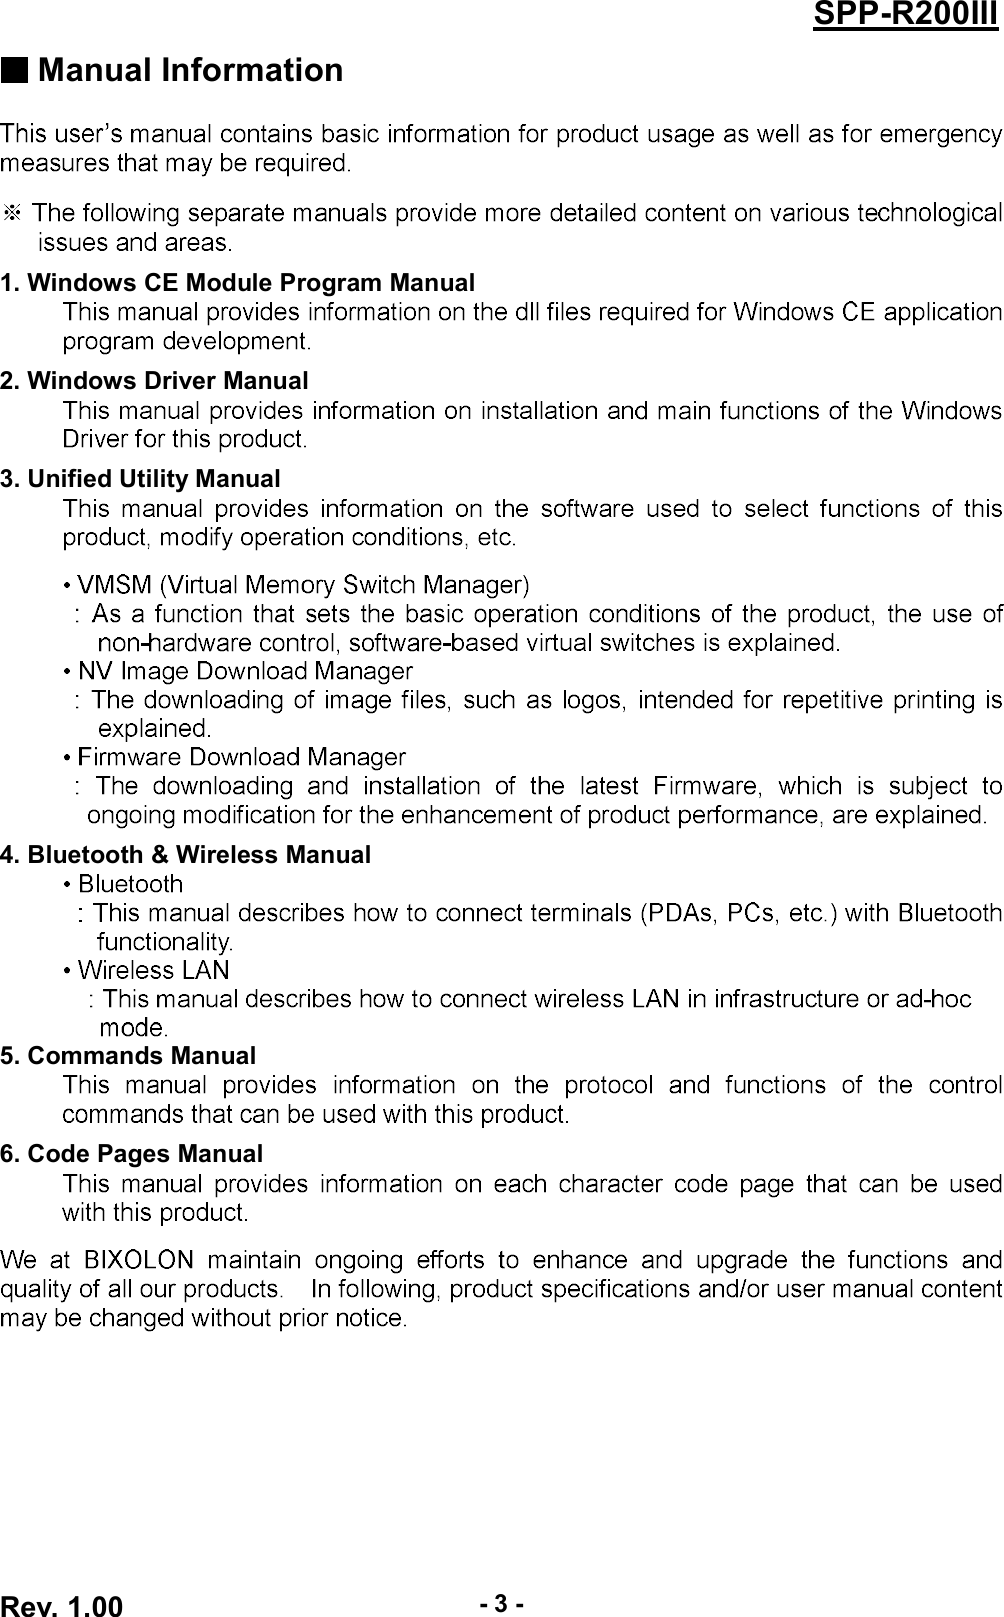 Rev. 1.00-3-SPP-R200III Manual InformationManual Information &amp; Usage Precautions1. Windows CE Module Program Manual2. Windows Driver Manual3. Unified Utility Manual4. Bluetooth &amp; Wireless Manual5. Commands Manual6. Code Pages Manual